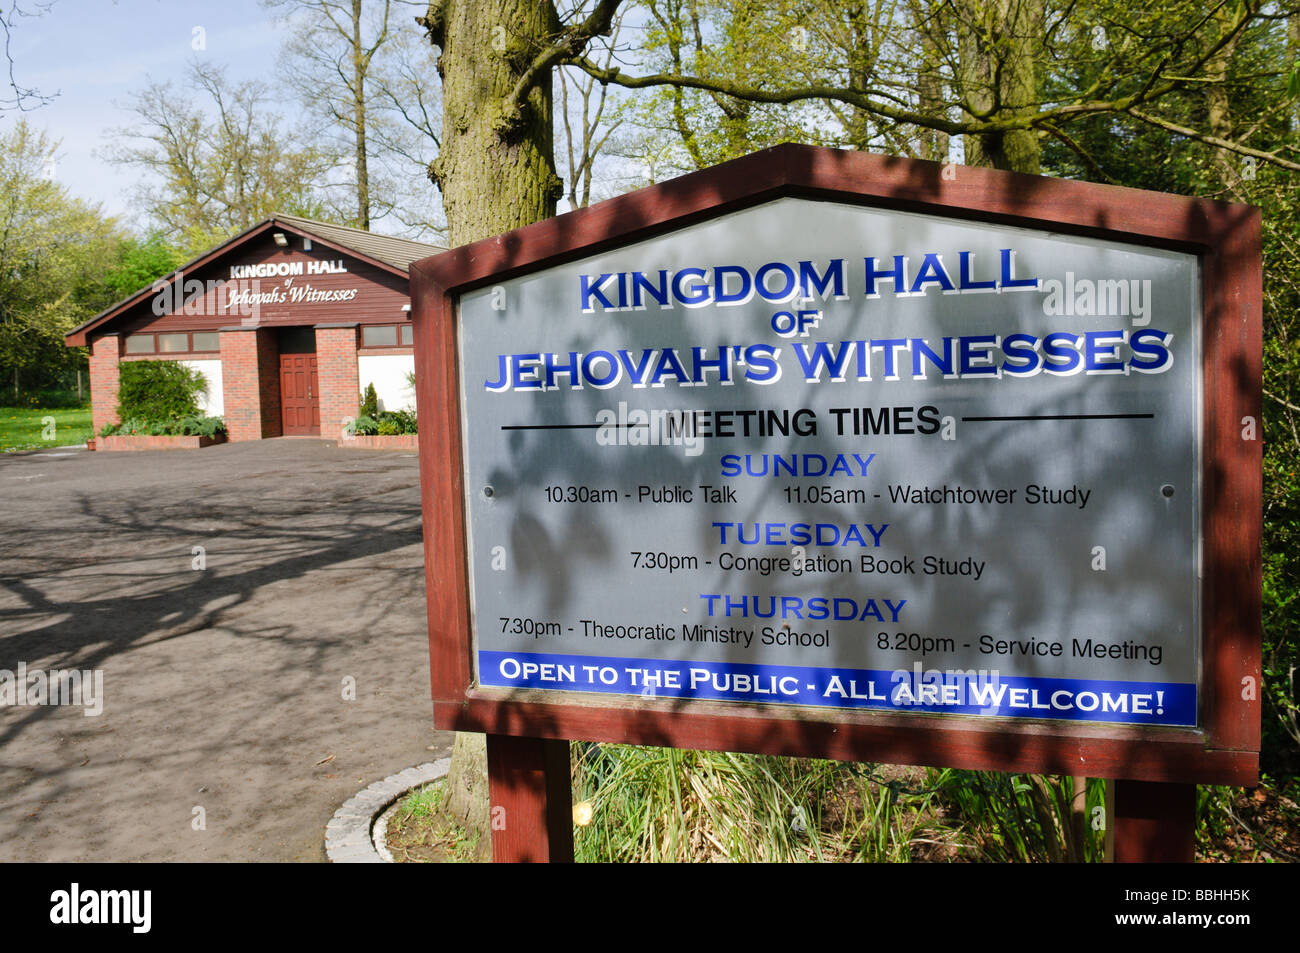 Kingdom Hall of Jehovah's Witnesses, Antrim Stock Photo